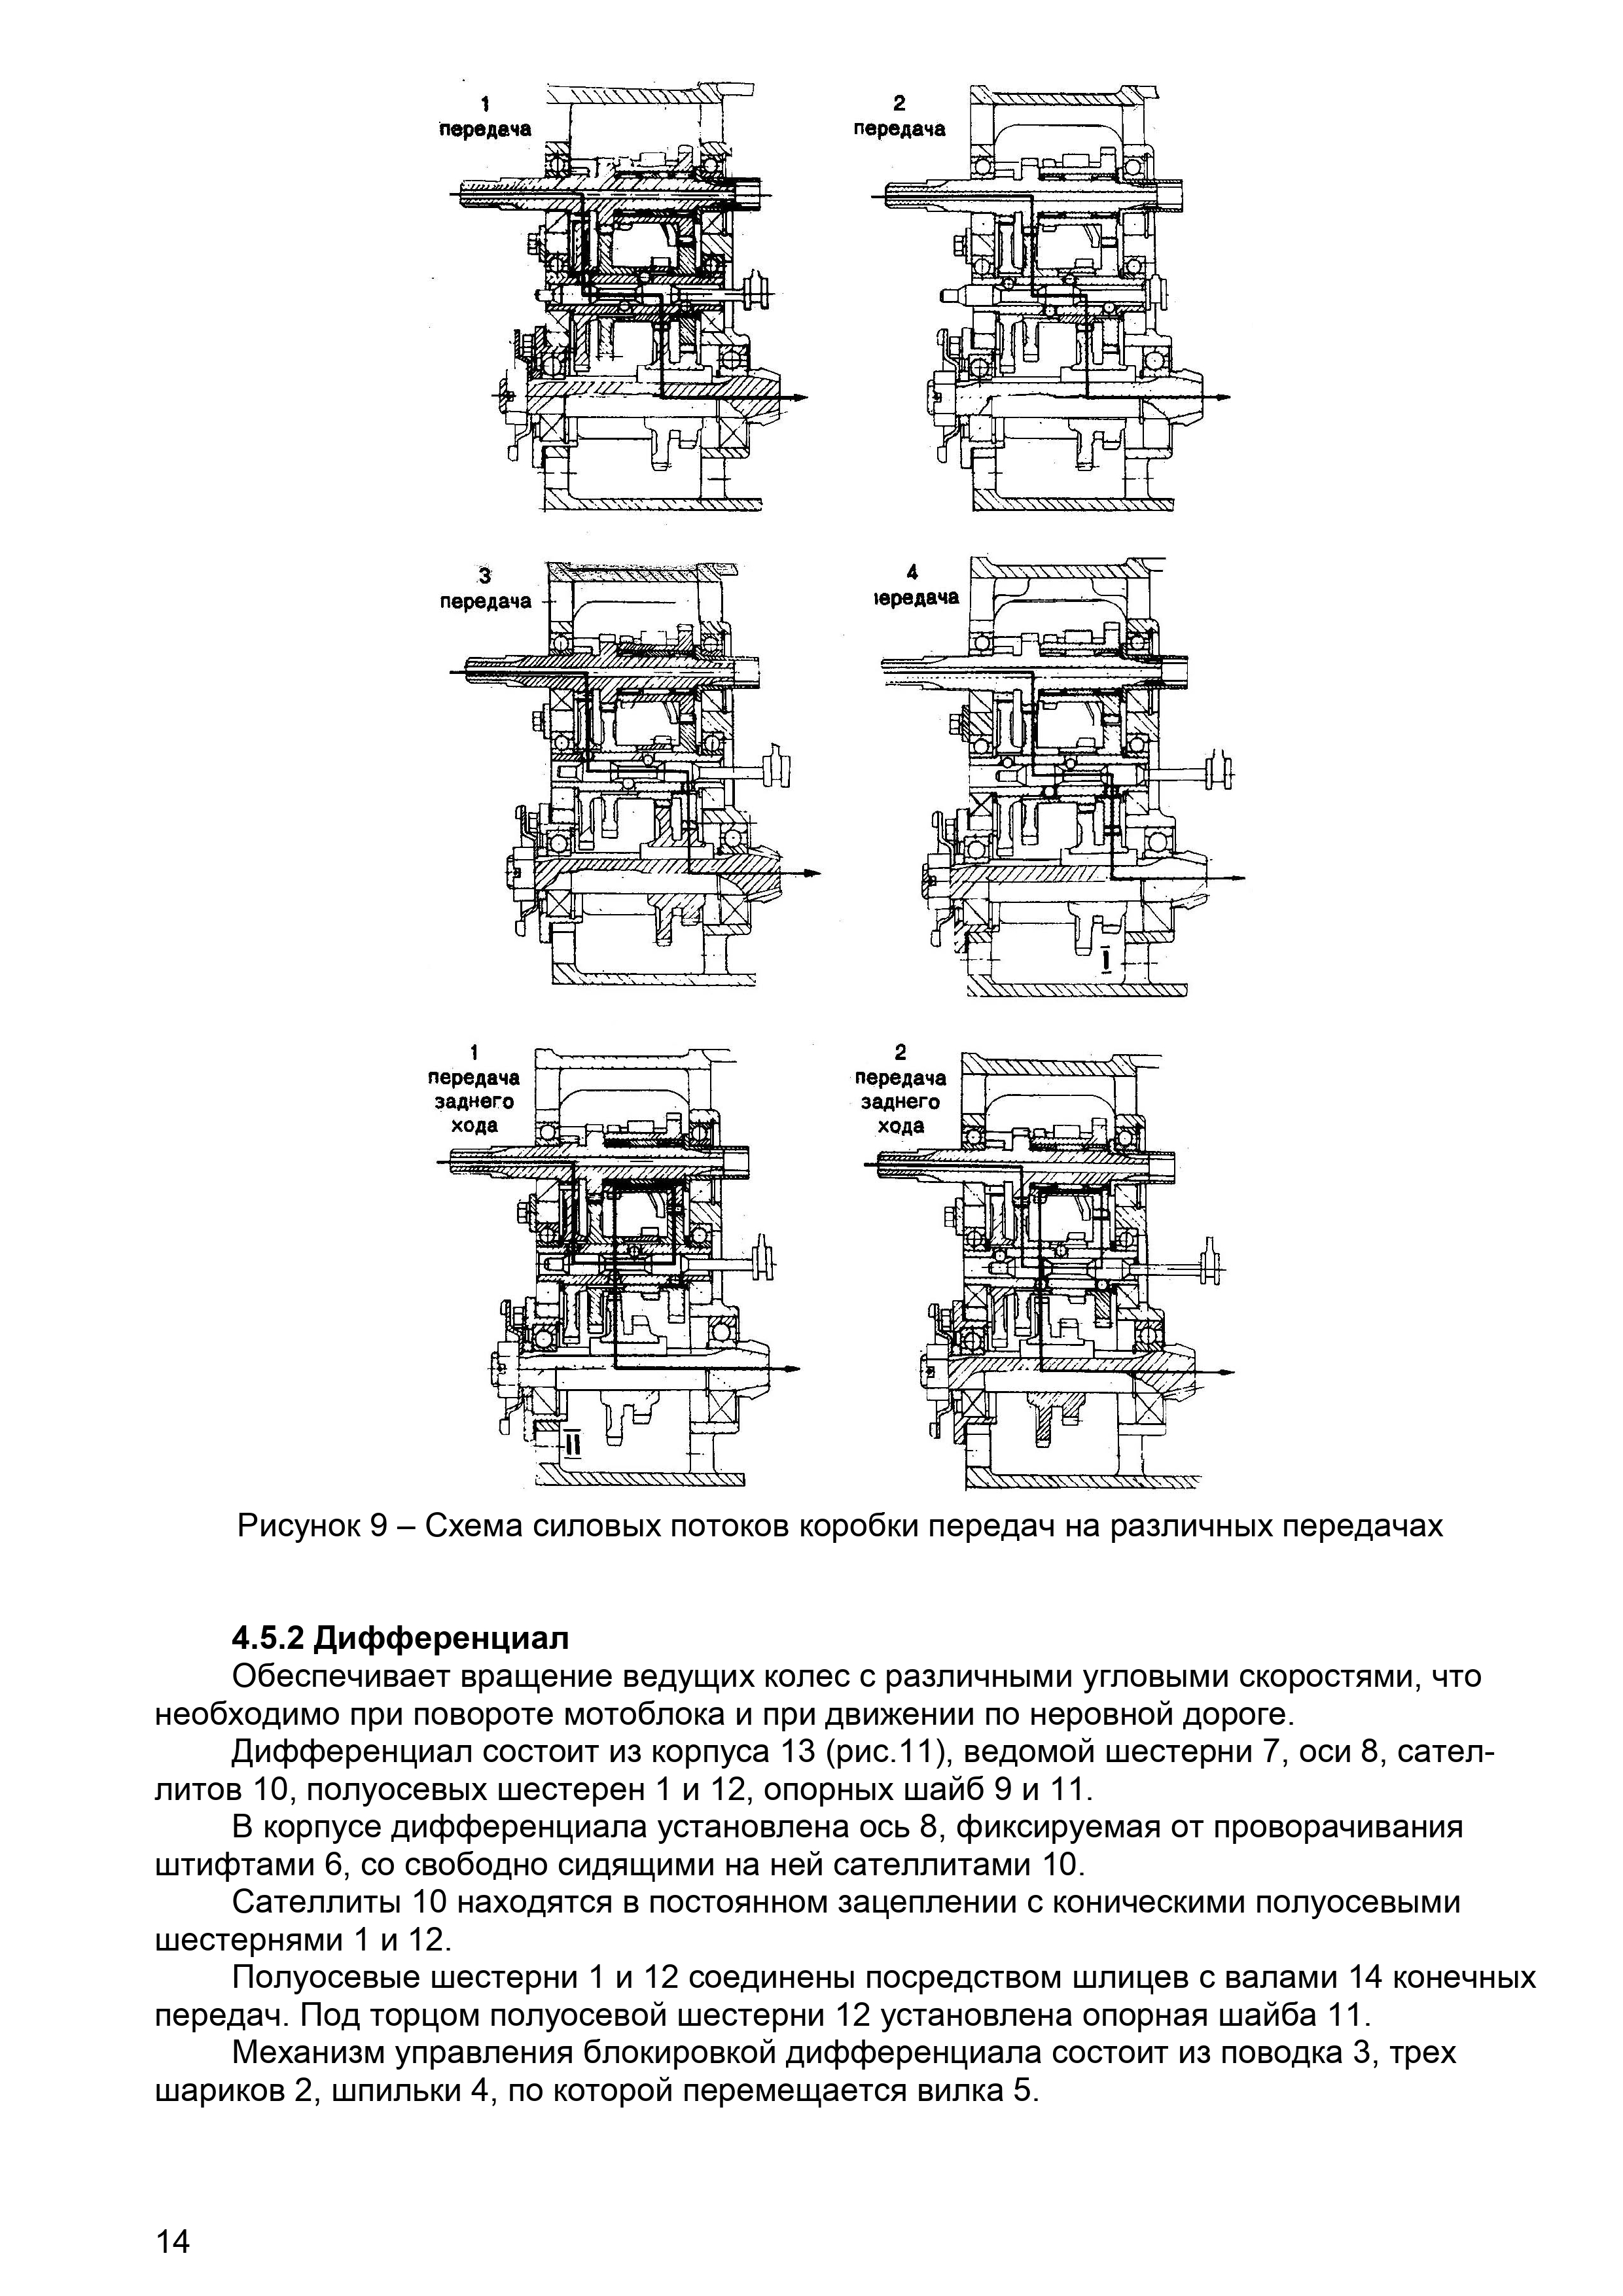 belarus_09h_manual i catalog (1)_page-0014